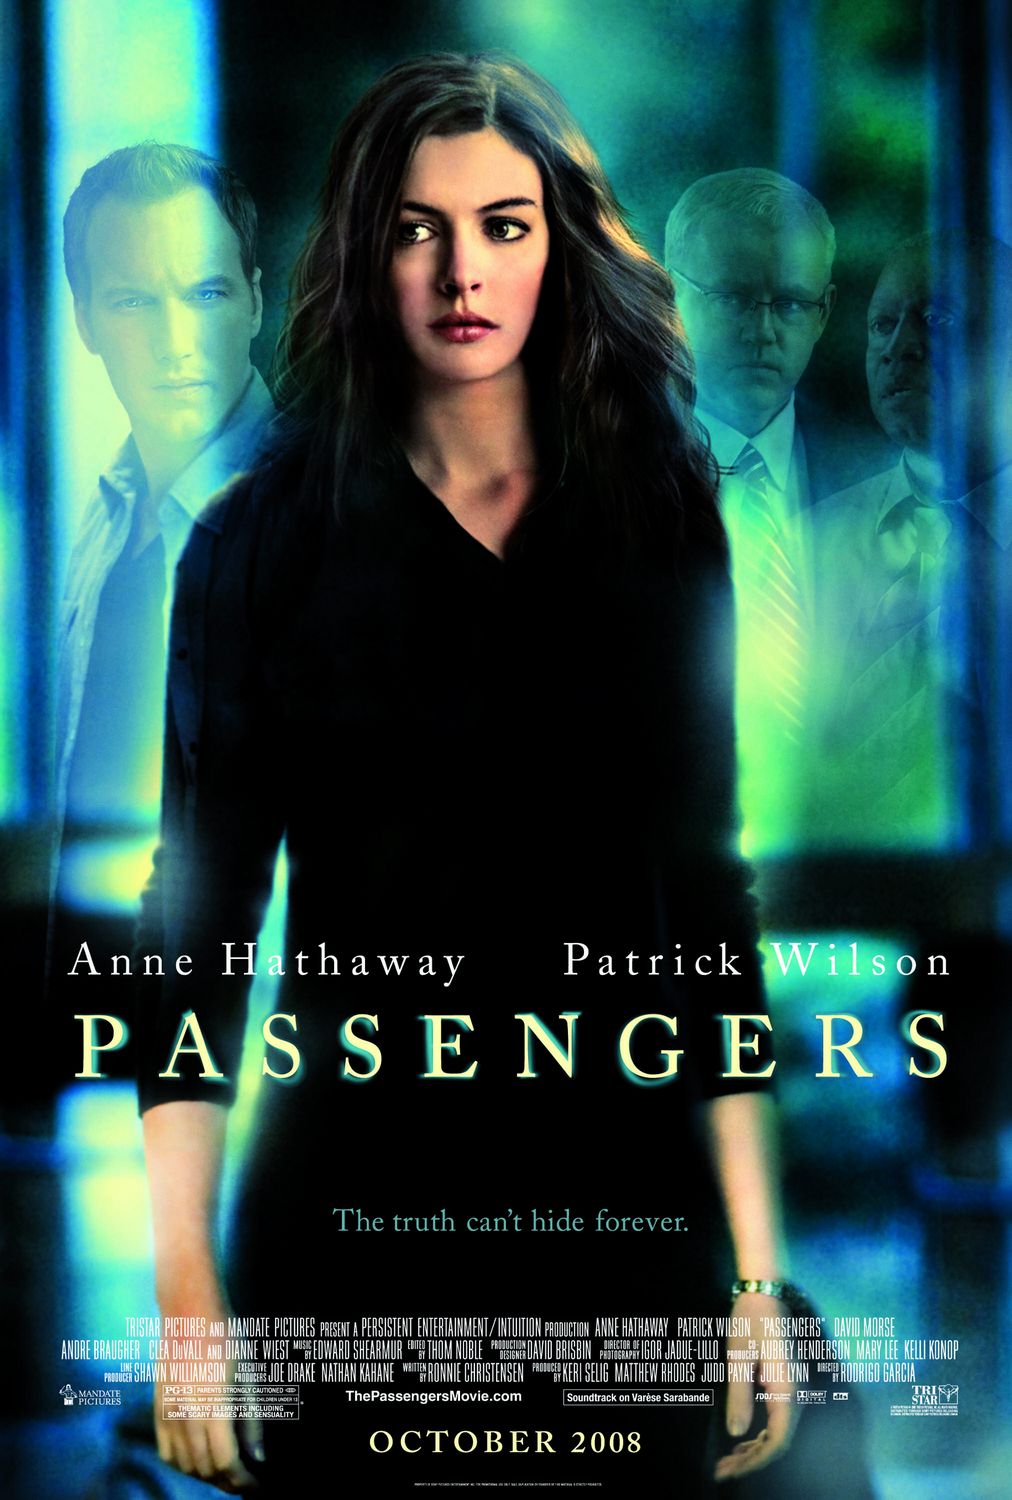 Anne Hathaway in Passengers